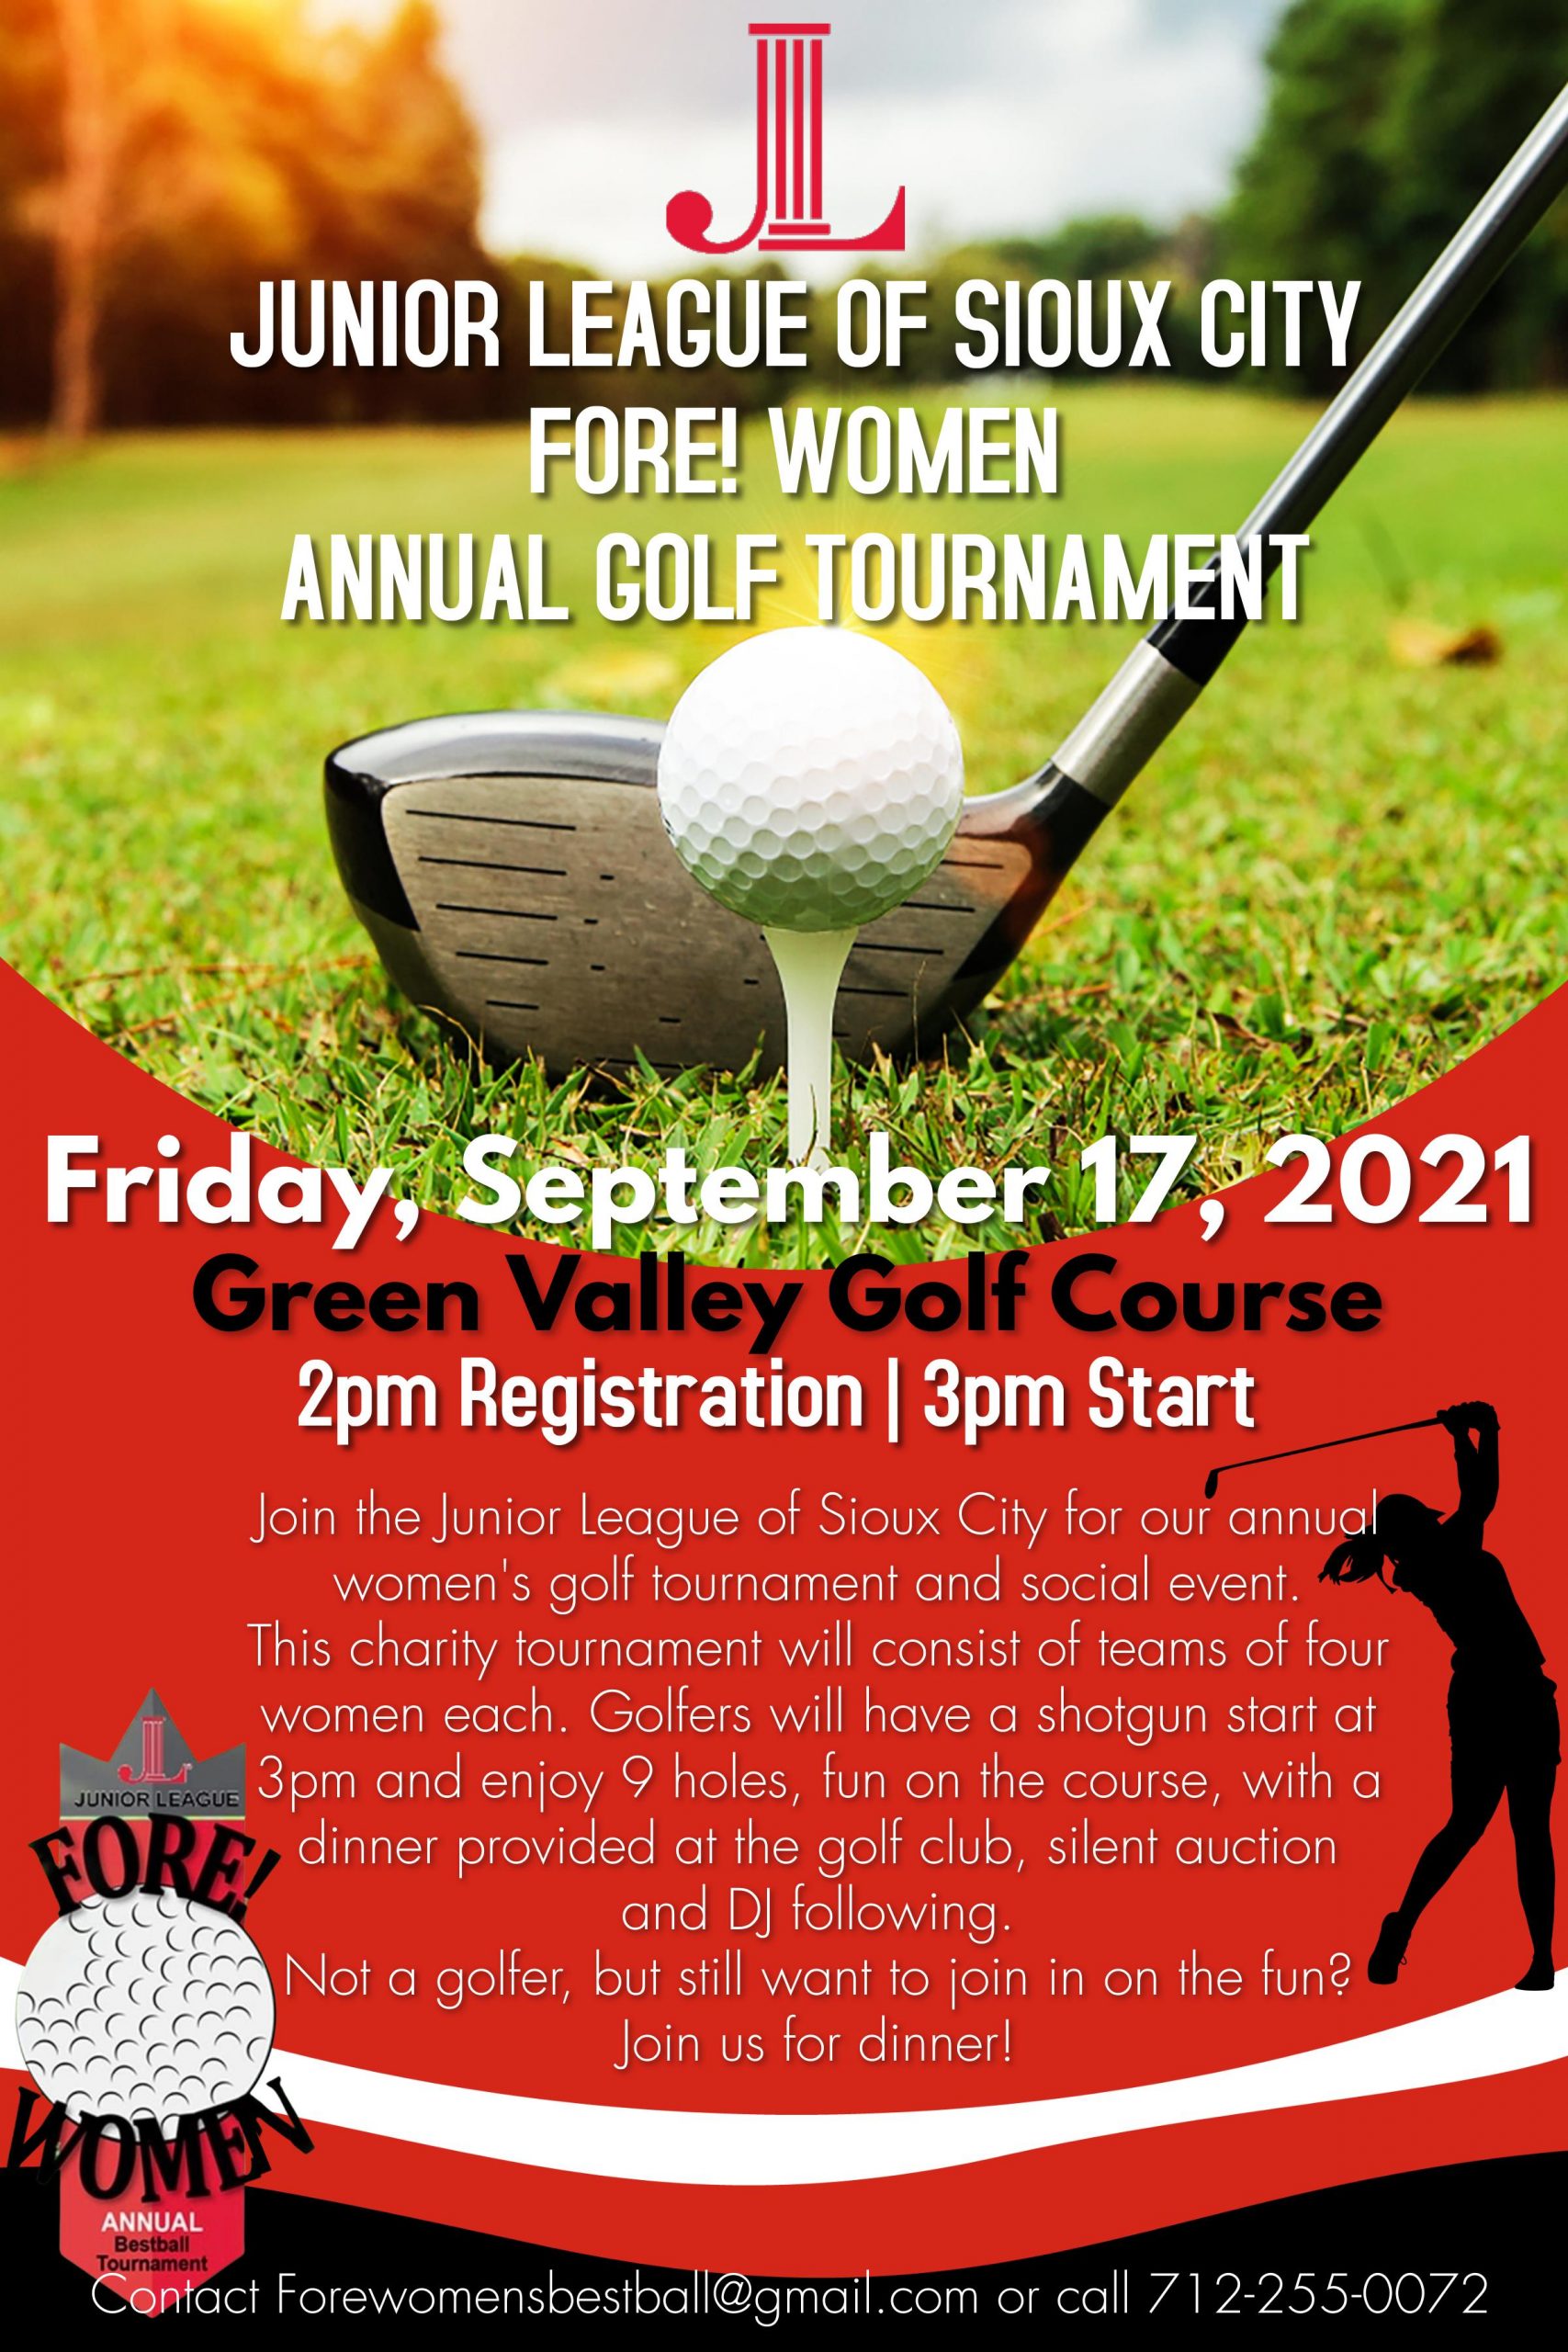 JLSC Fore! Women's Golf Tournament